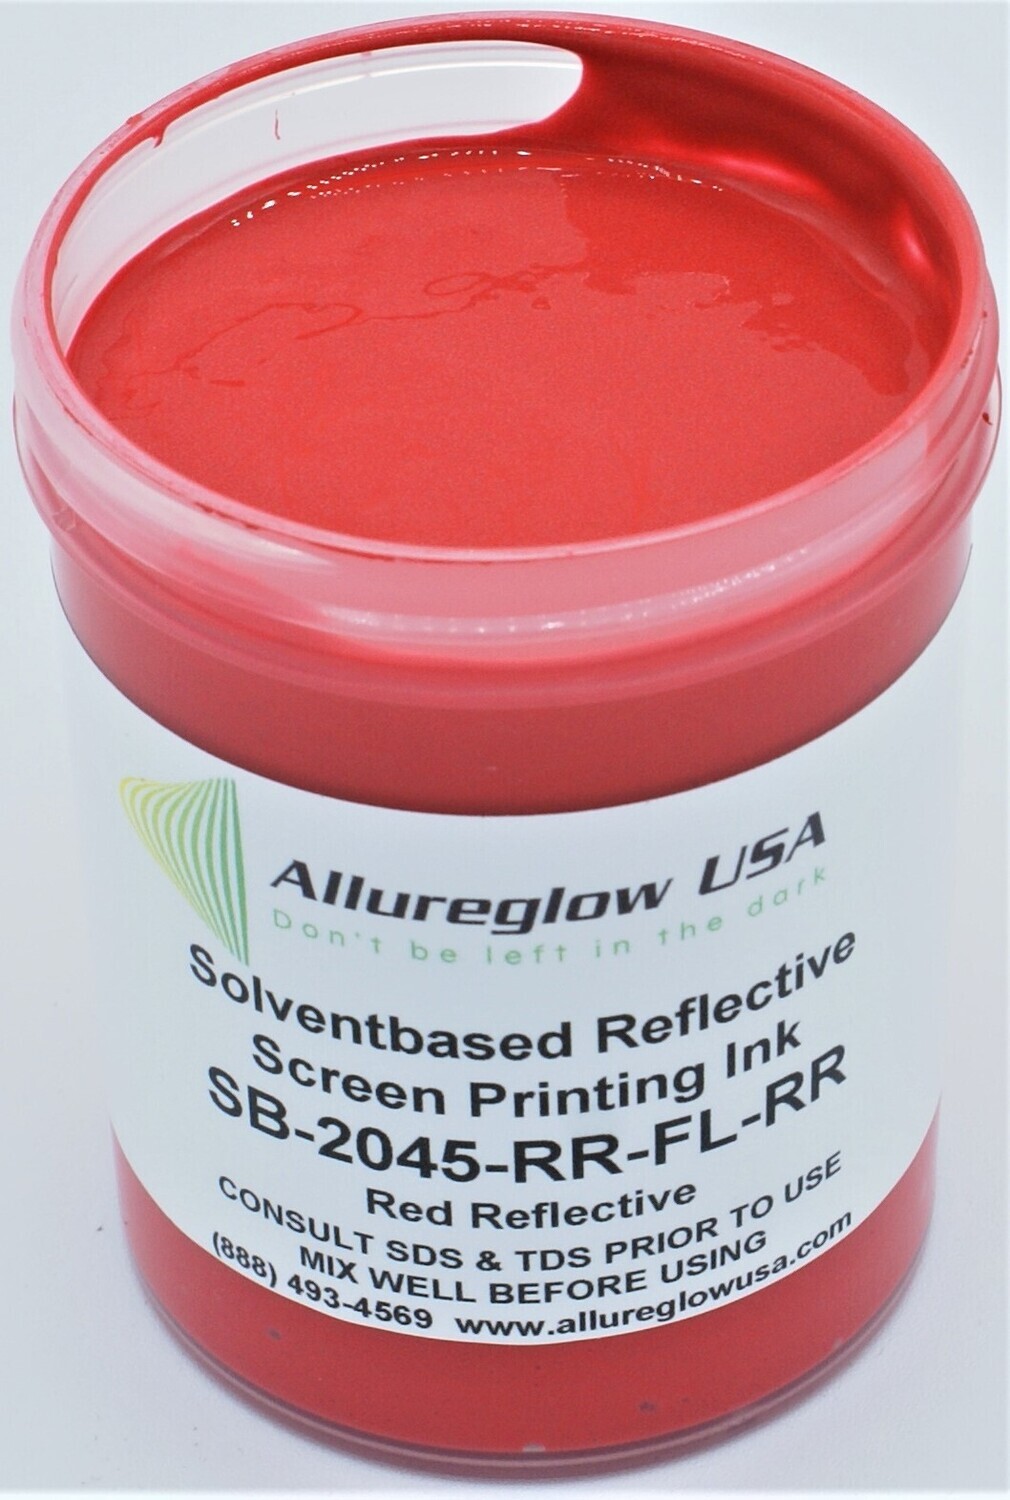 SB-2045-RR-FL-RR-8OZ  SOLVENT BASED RED REFLECTIVE SCREEN PRINTING INK -  8OZ